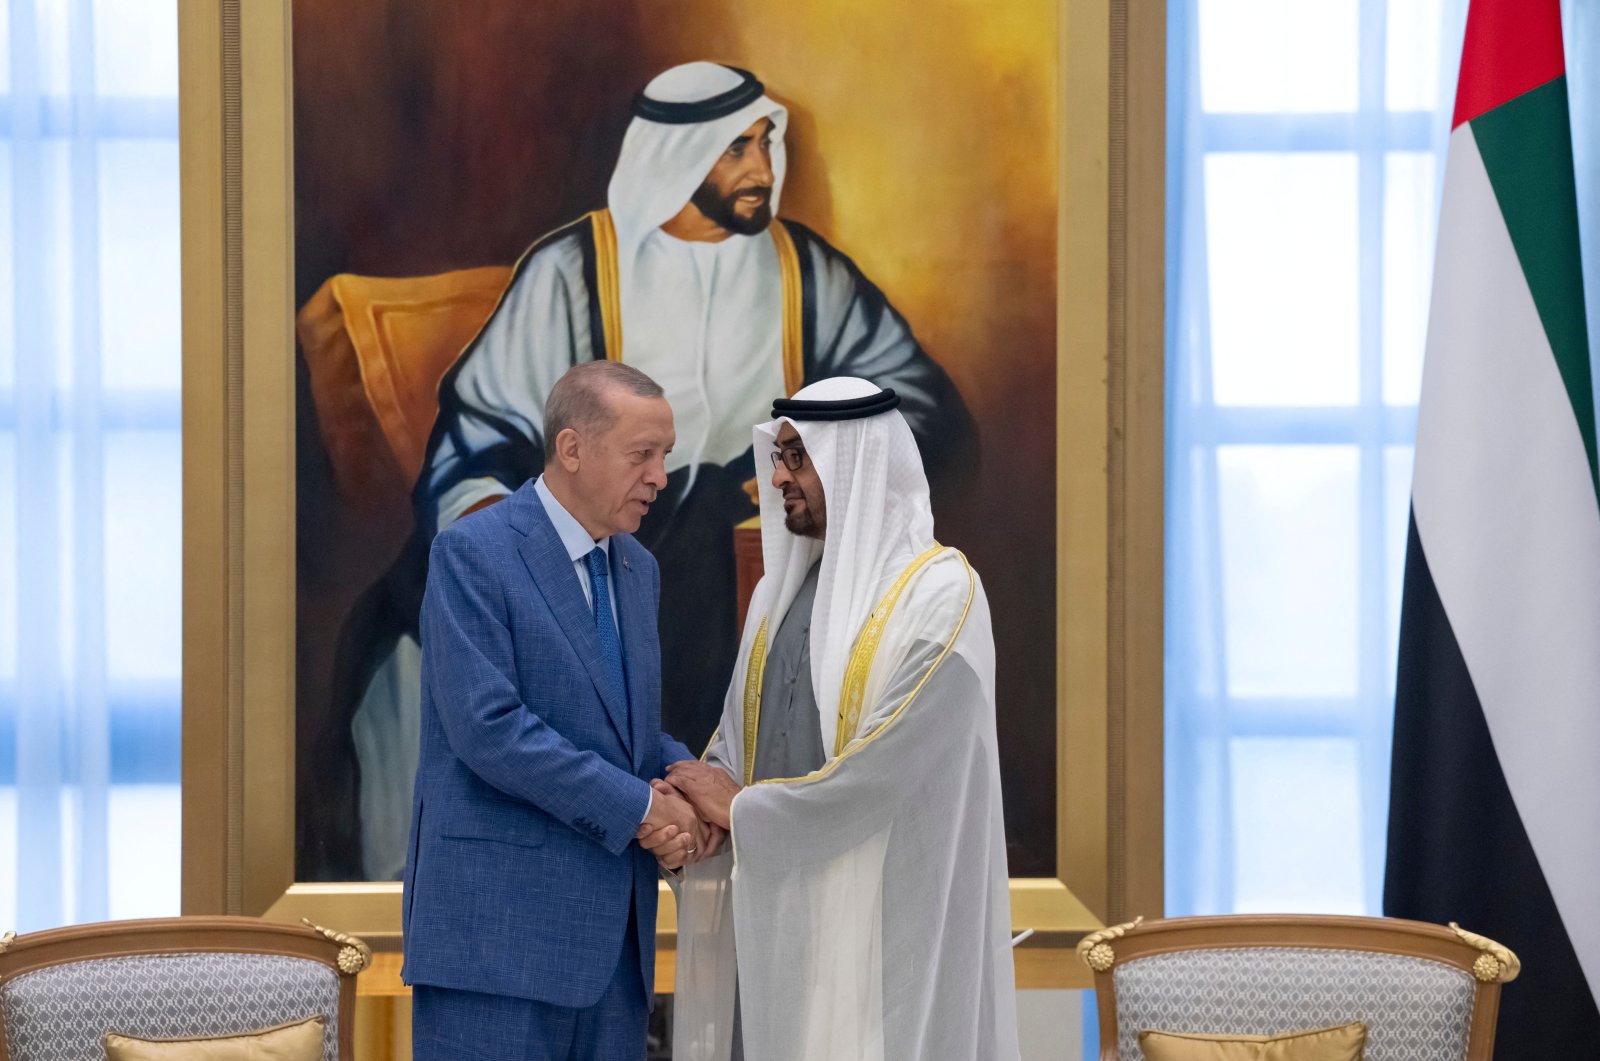 Türkiye, UAE ink 13 agreements worth $50.7B during Erdoğan’s visit